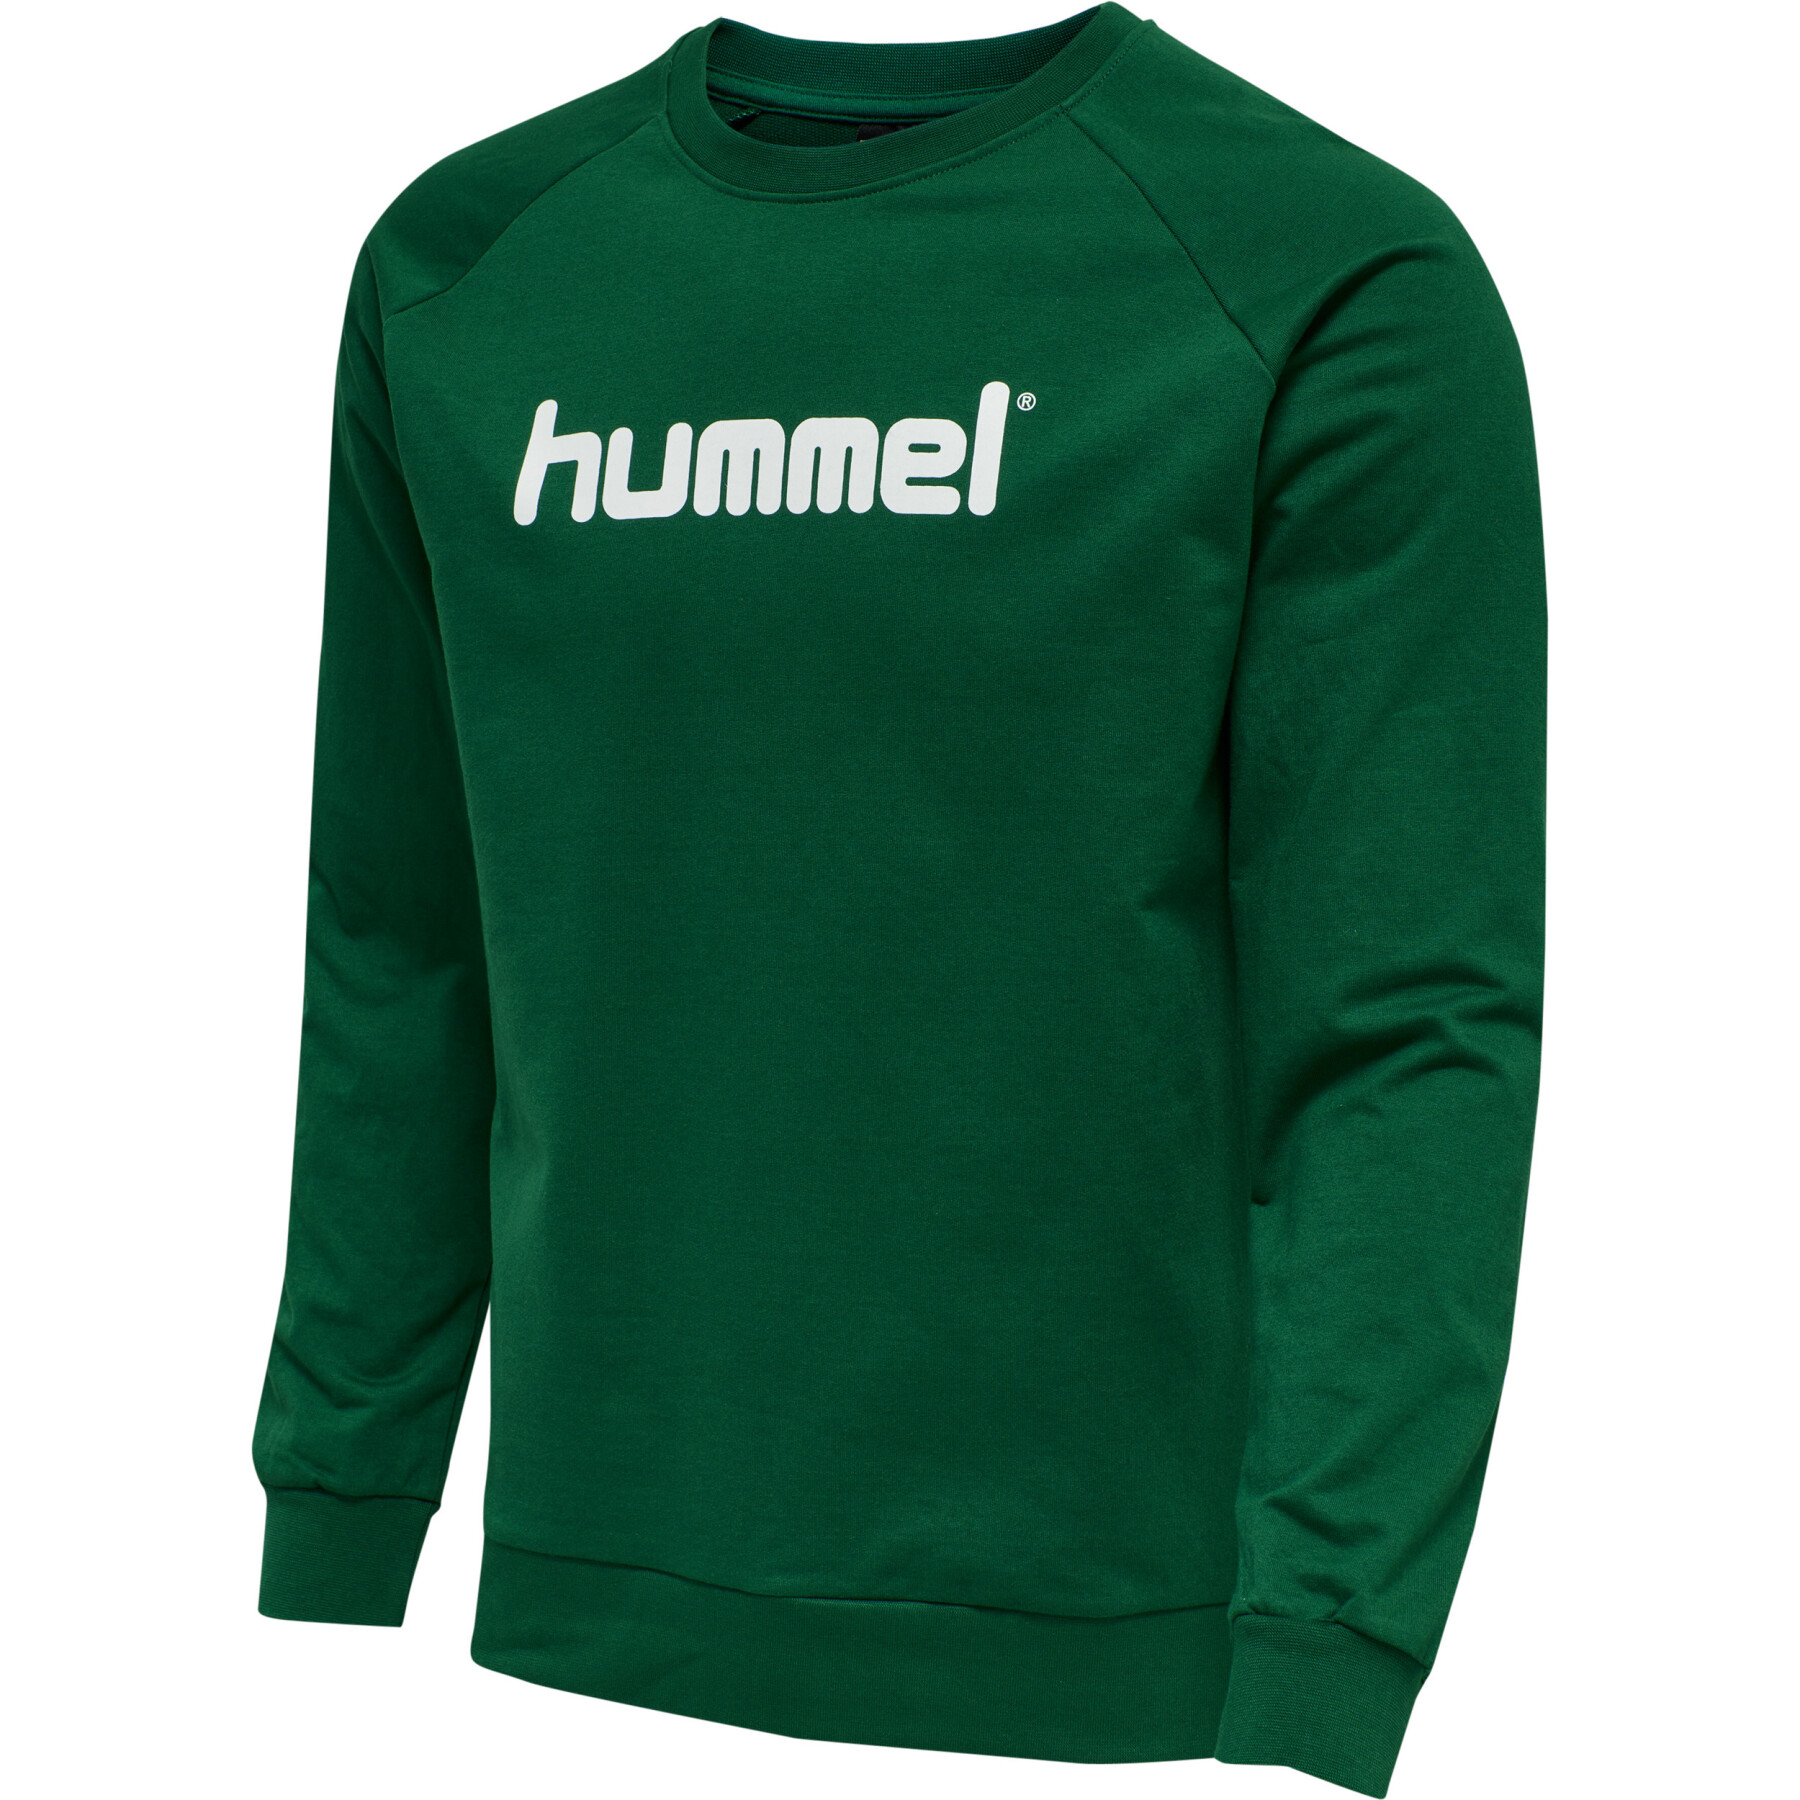 Sudadera Hummel  Logo